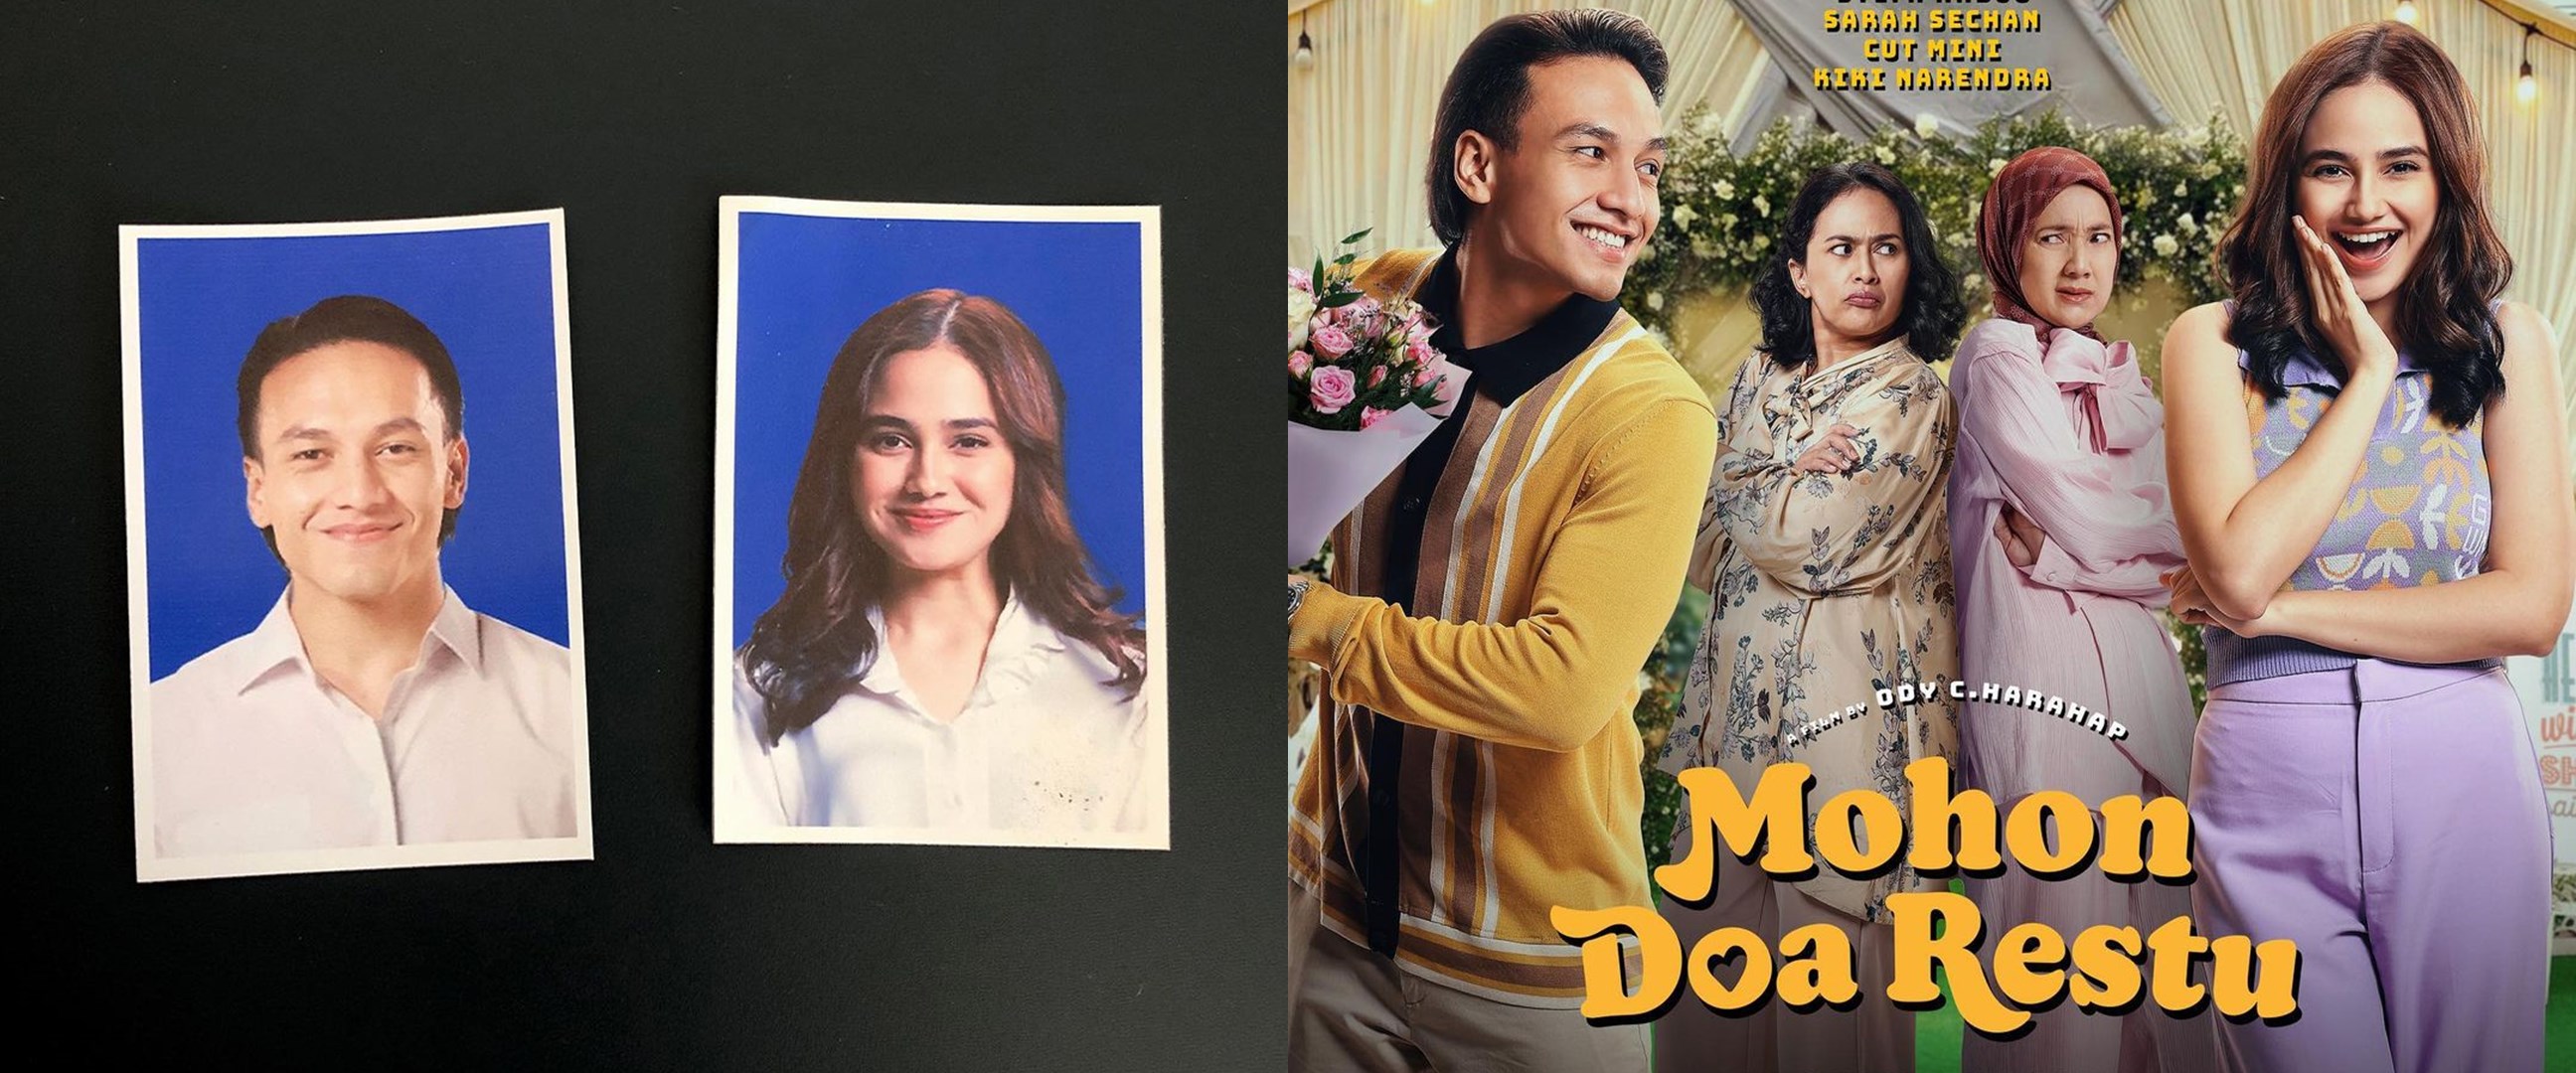 Film Mohon Doa Restu, drama calon pengantin dan mertua yang disebut relatable